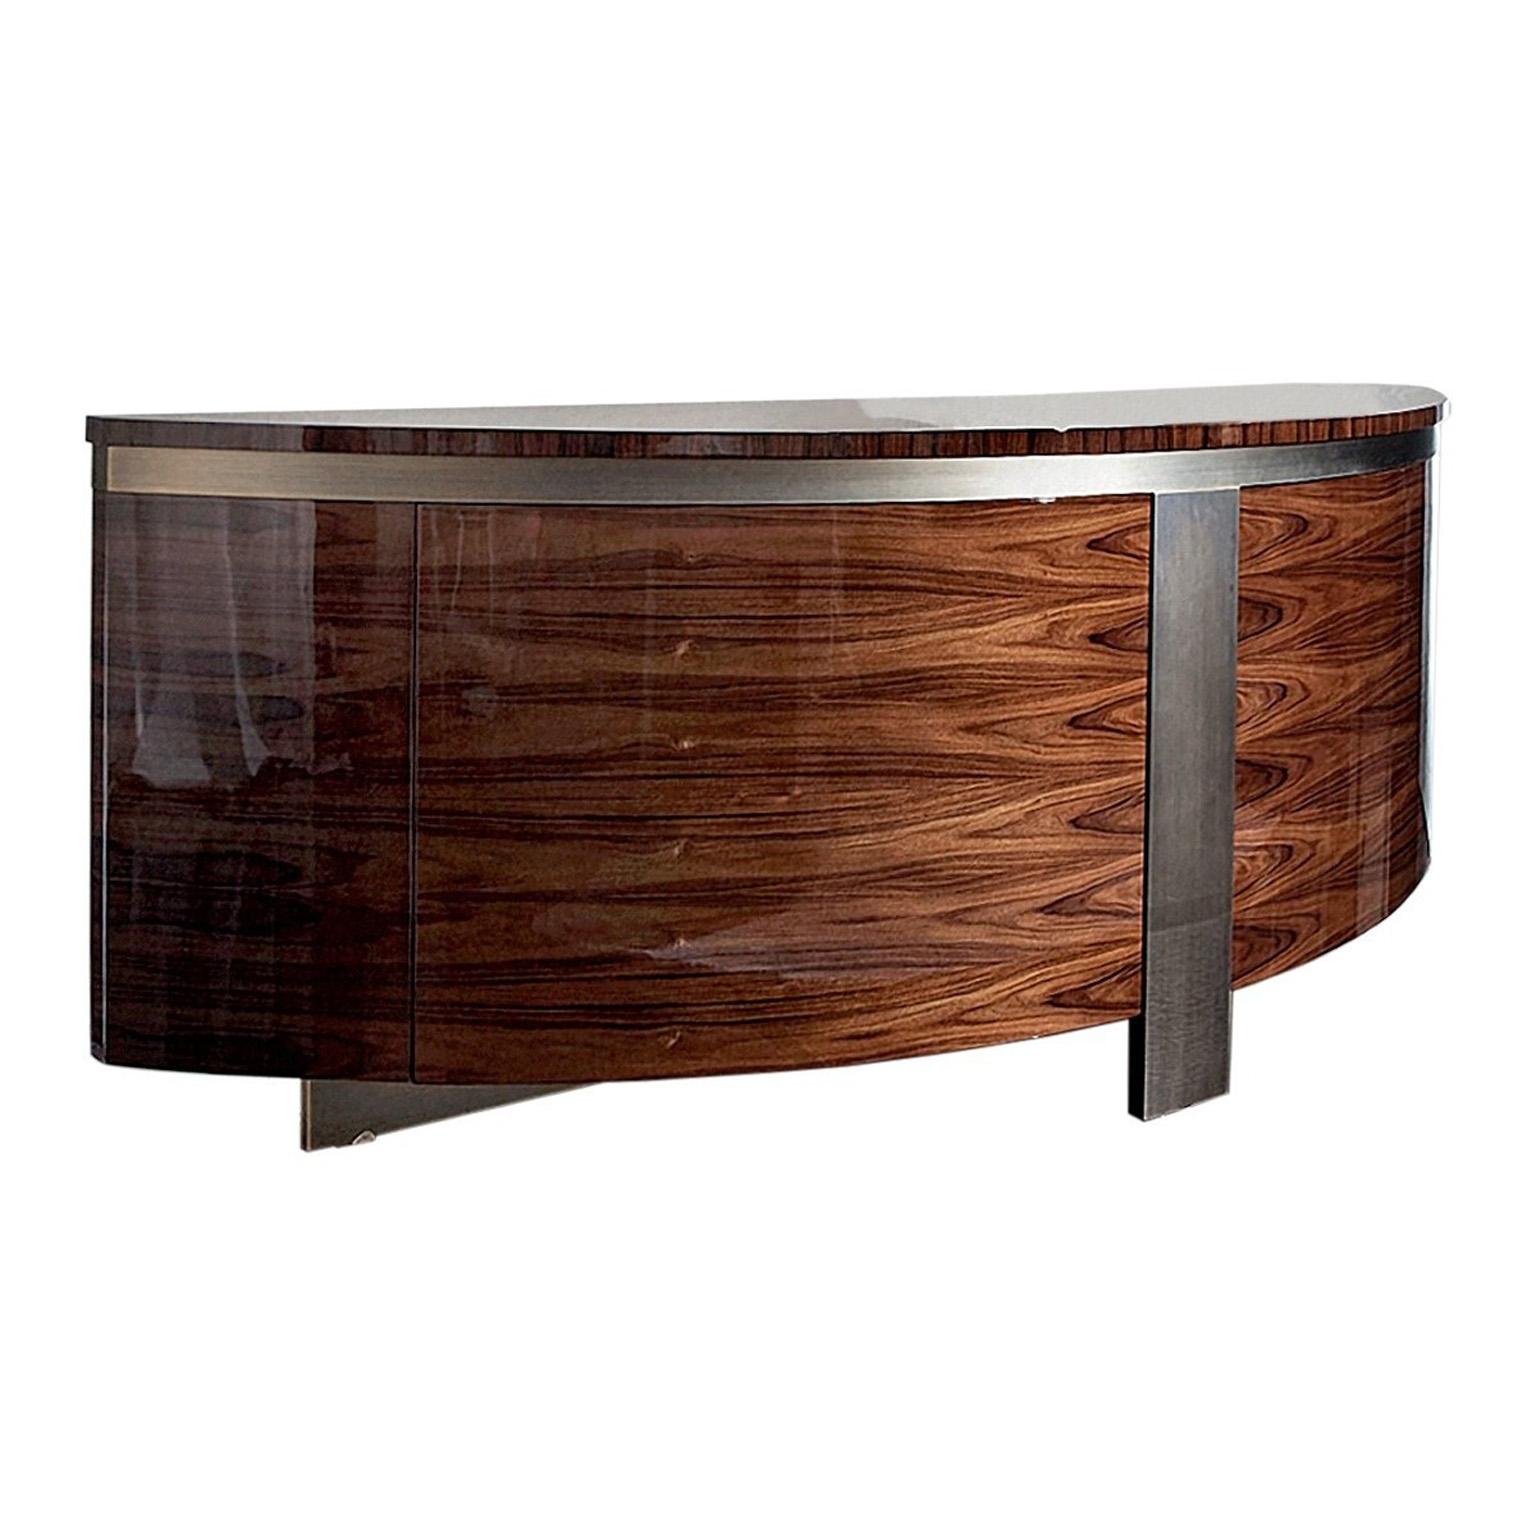 'Giorgio Collection' Brazilian Rosewood Curve High Gloss Buffet Sideboard